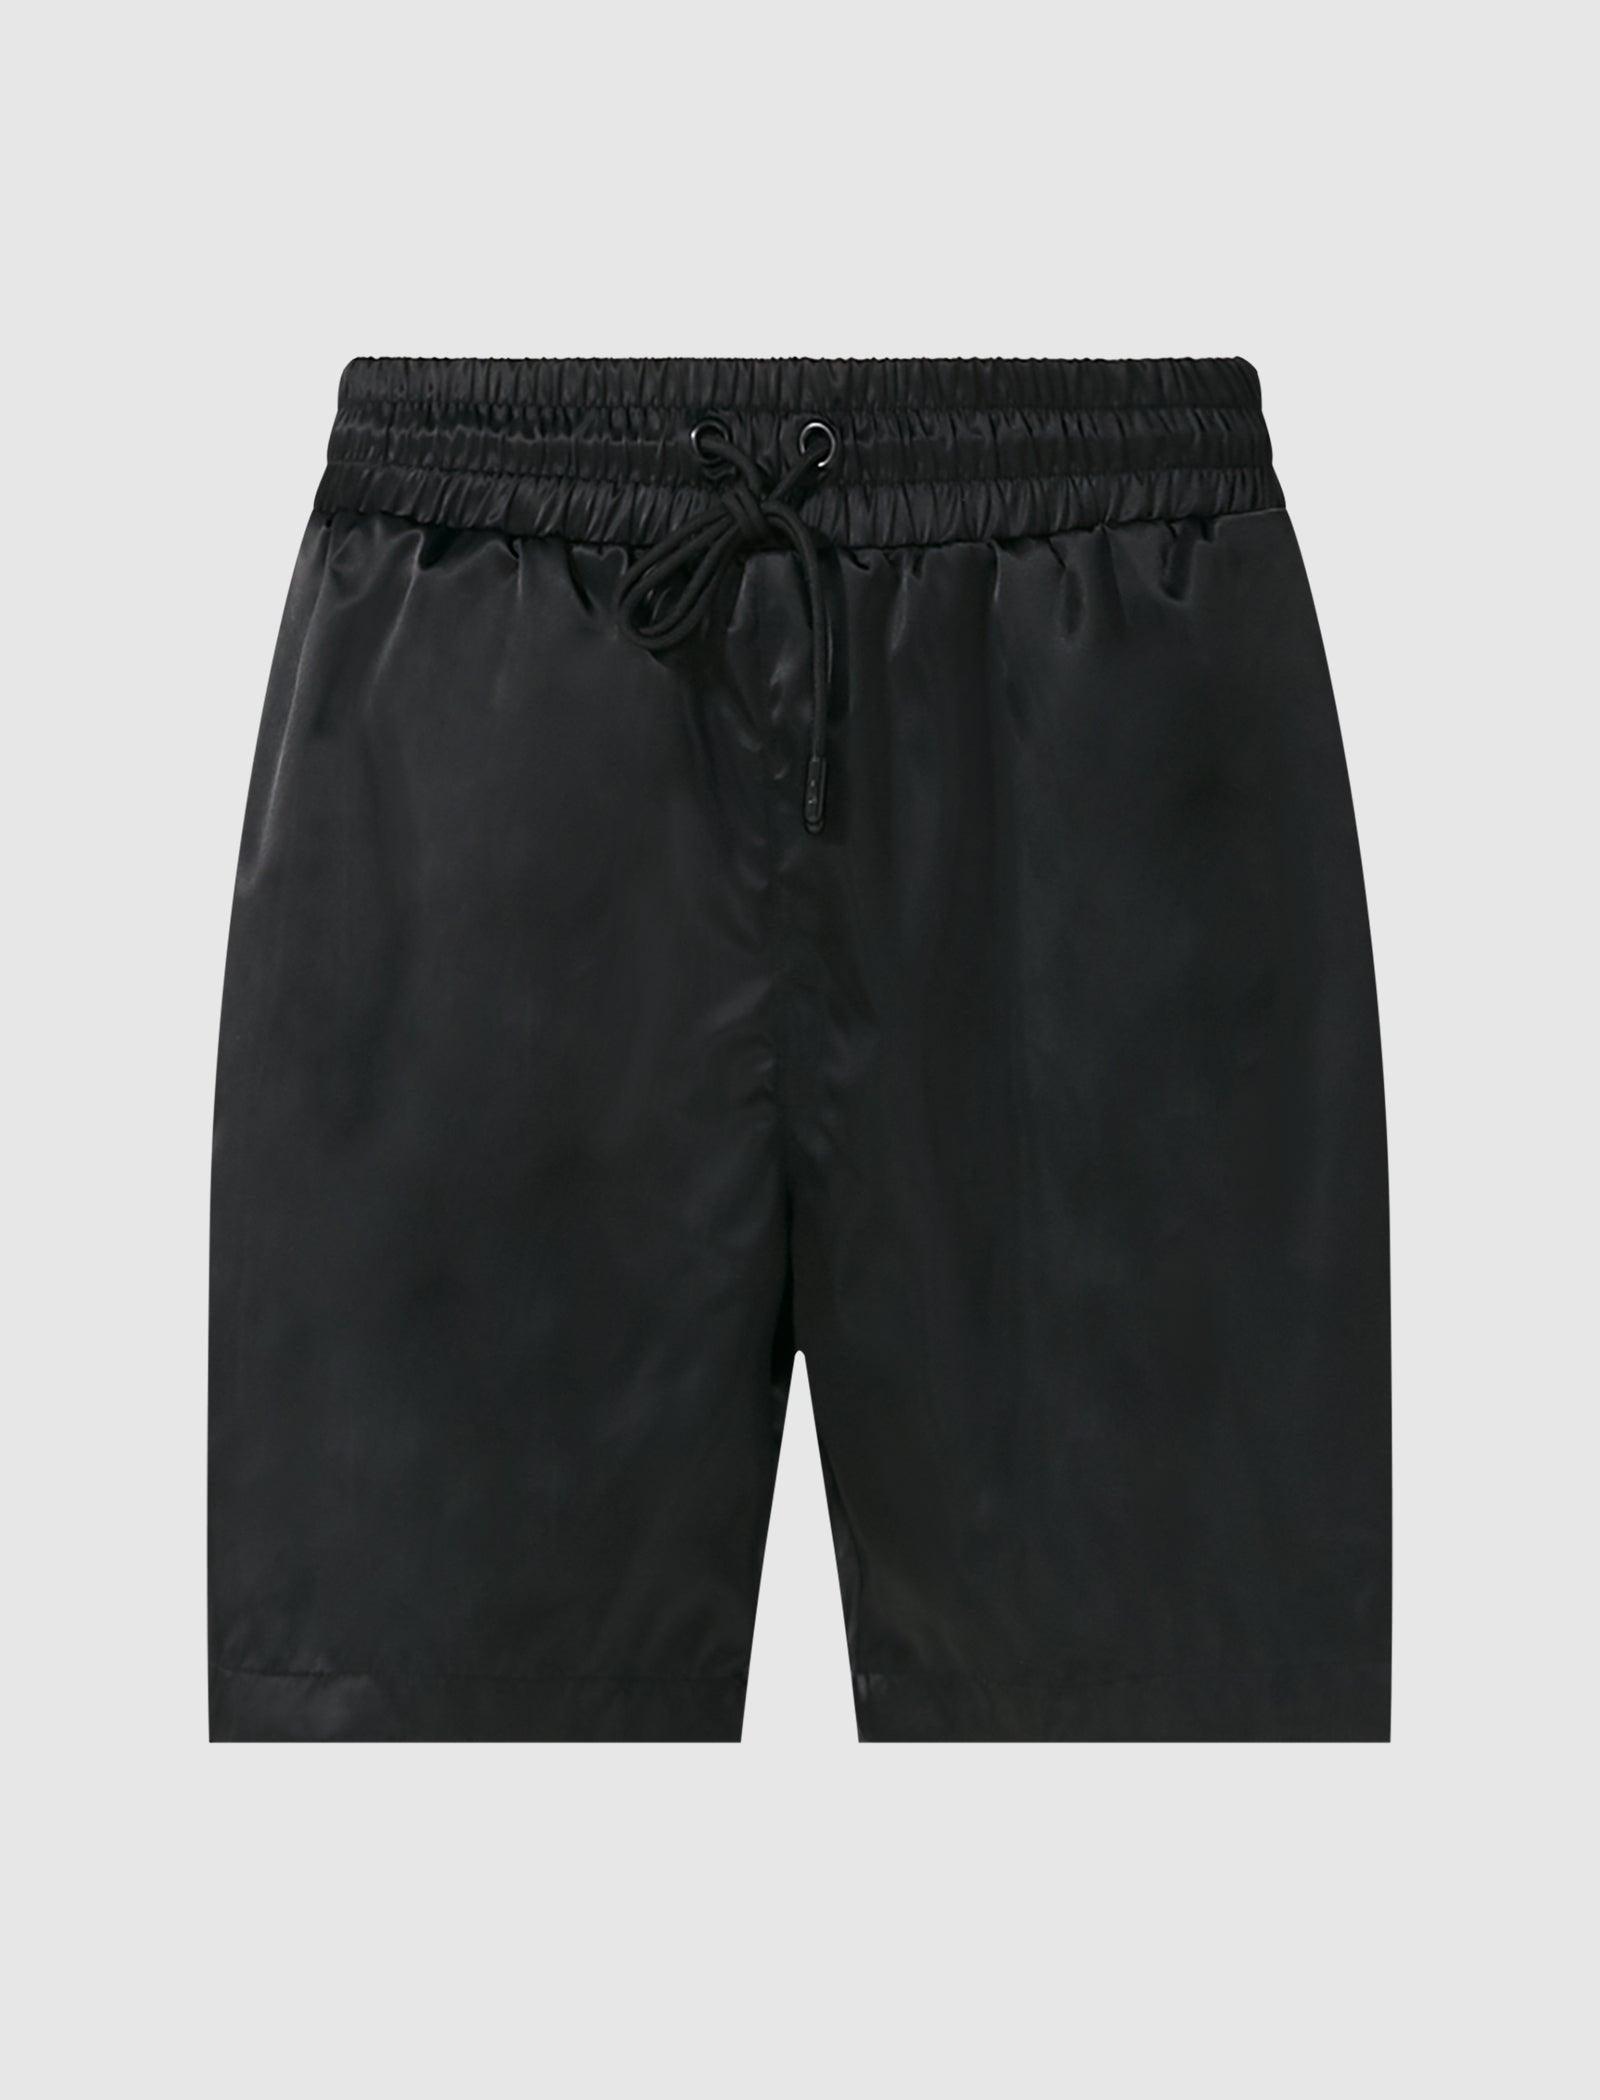 A MA MANIERE Nylon Short in Black for Men | Lyst